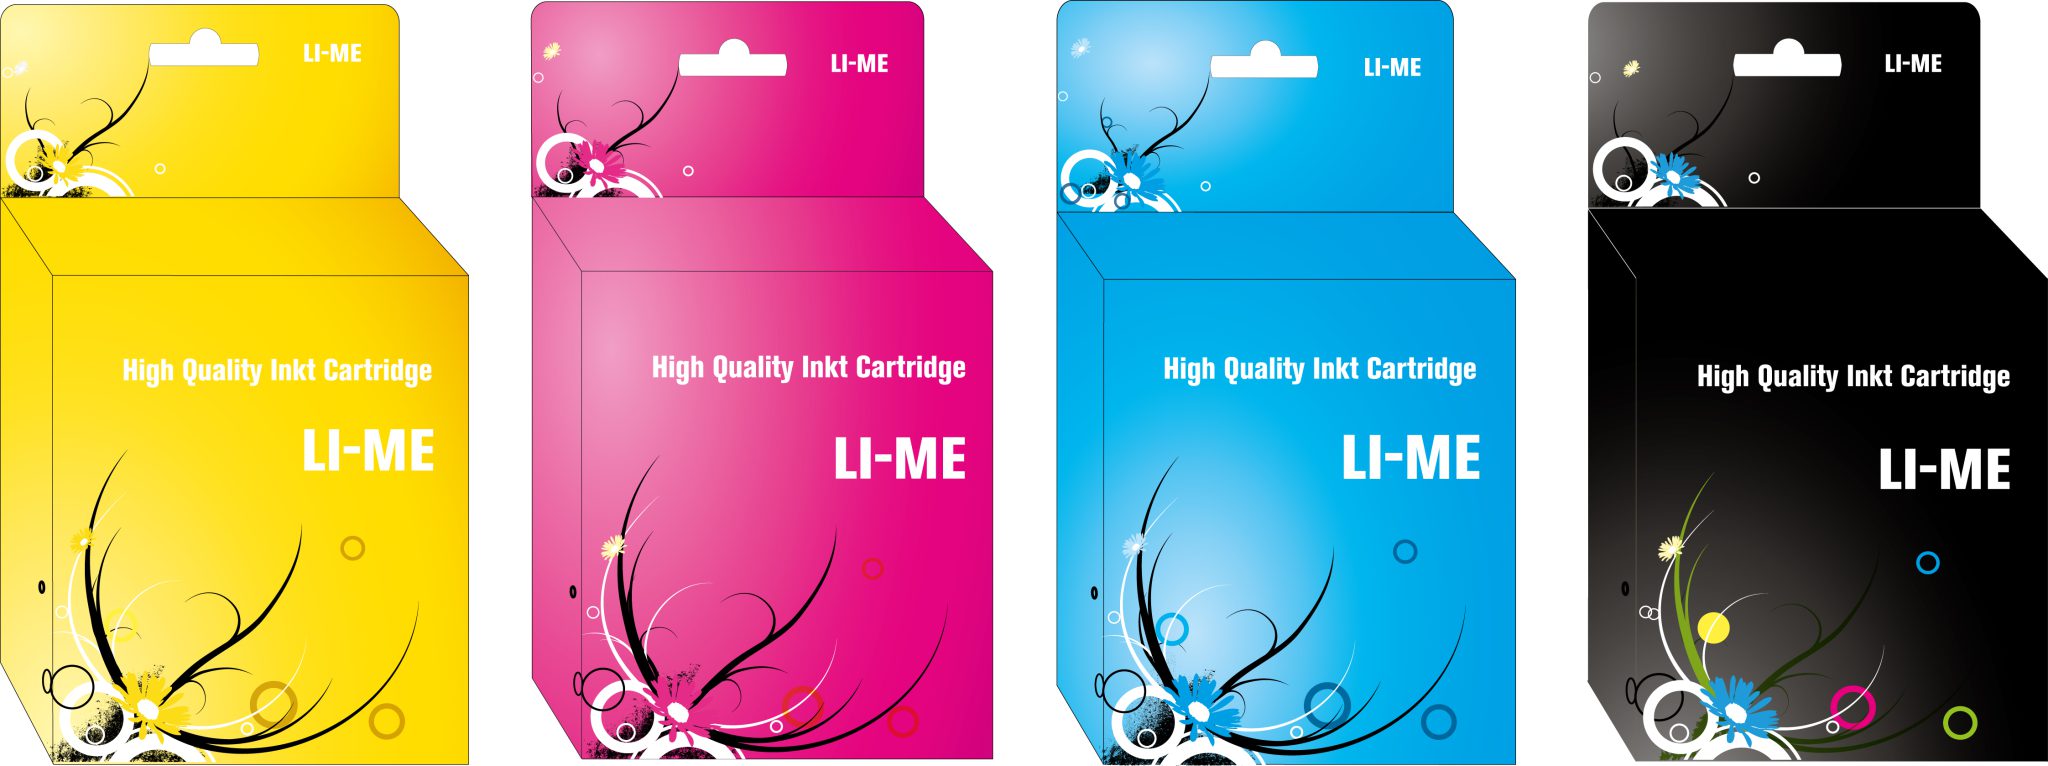 LI-ME Inkt Cartridge 364XL